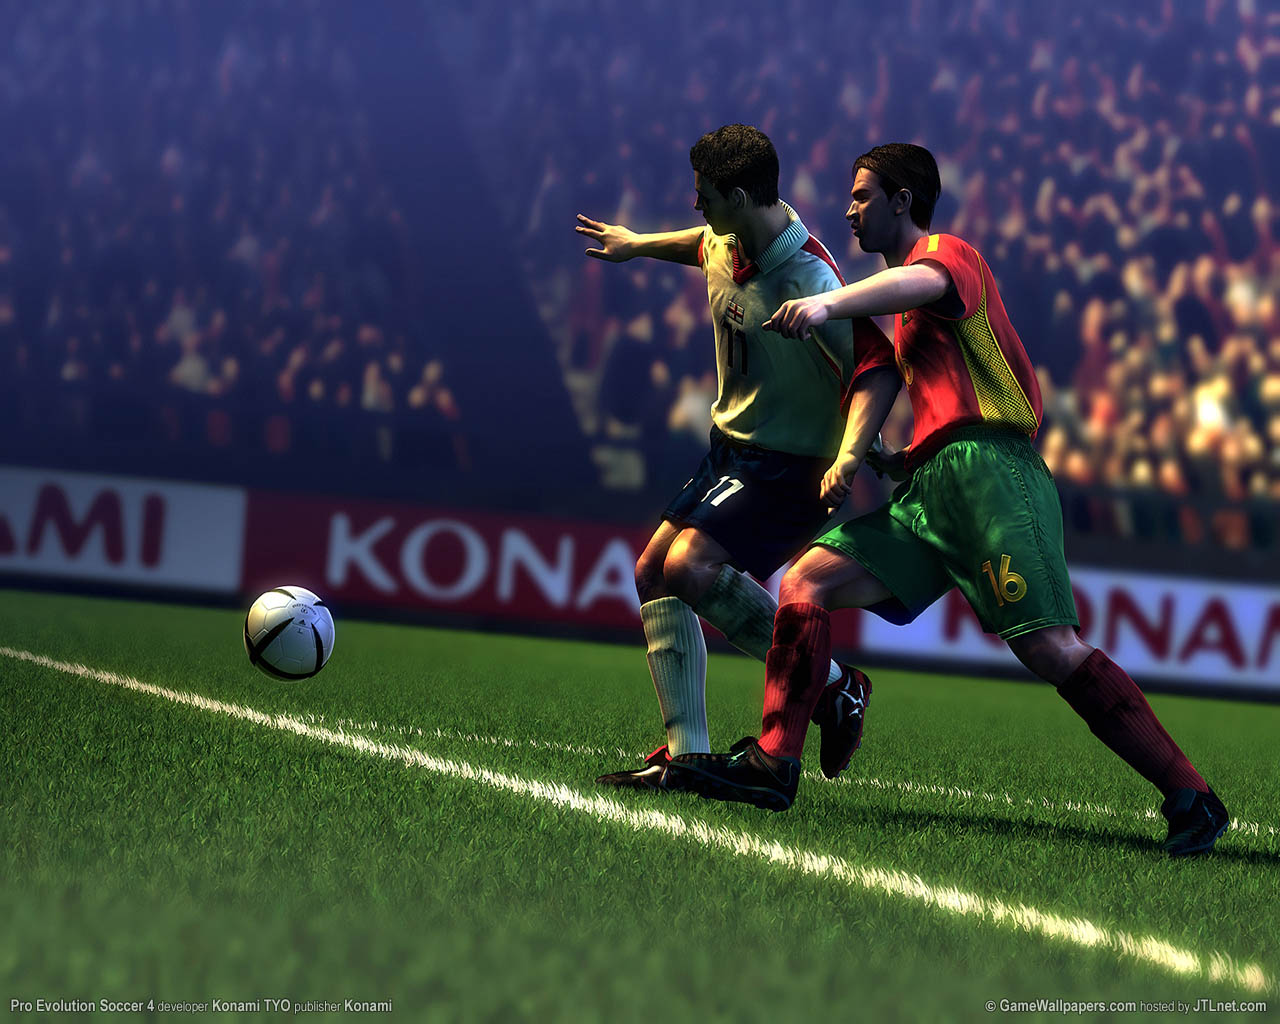 Pro Evolution Soccer 4 fondo de escritorio 02 1280x1024